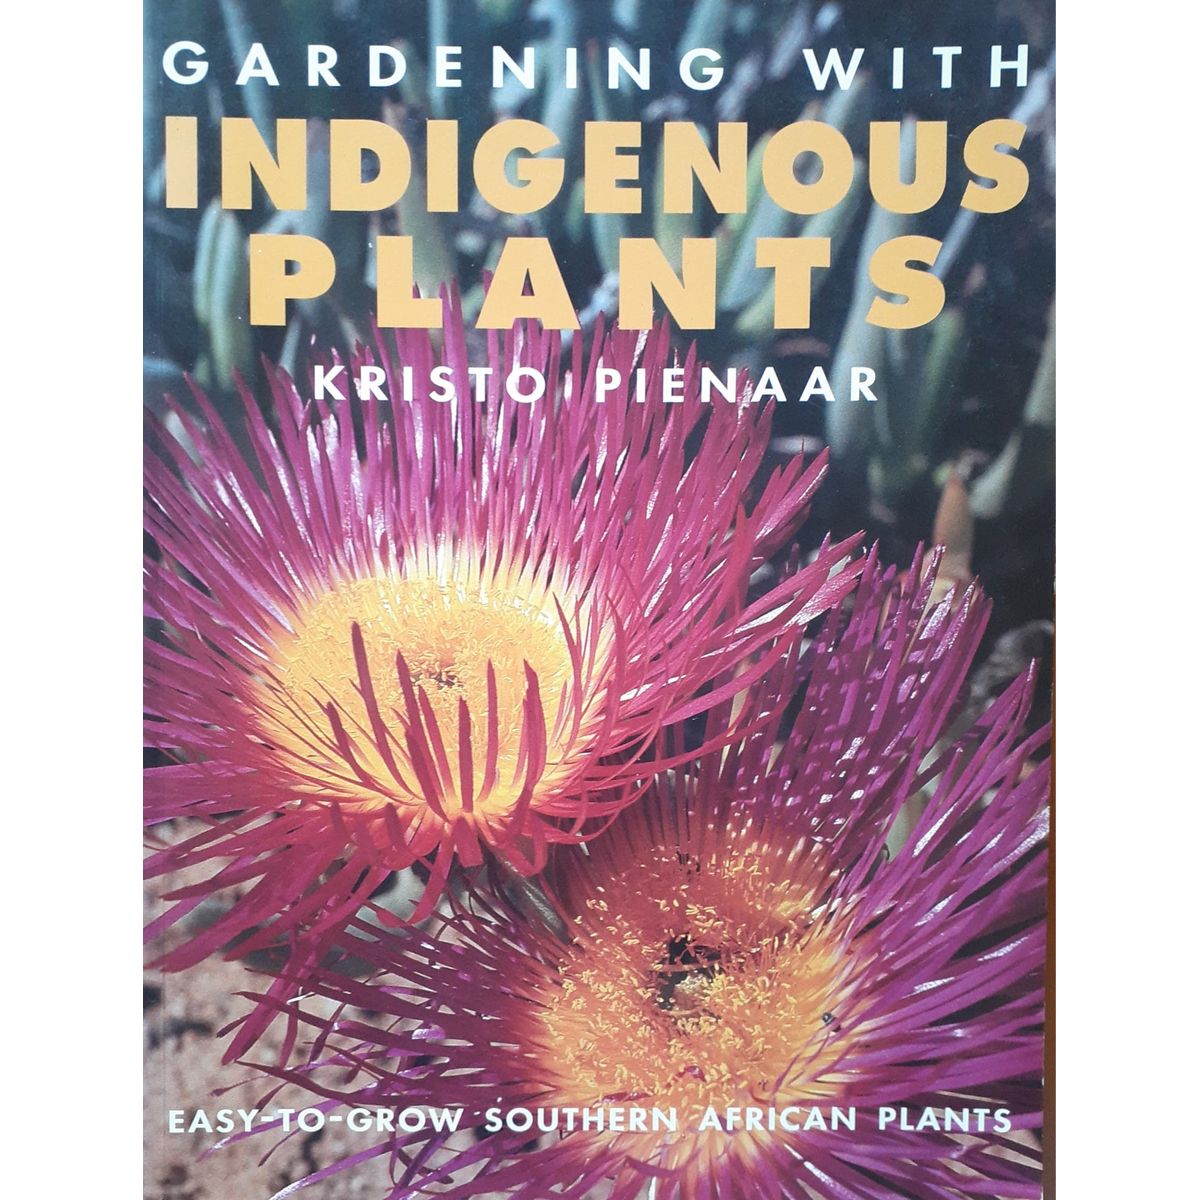 ISBN: 9781868723928 / 1868723925 - Gardening with Indigenous Plants by Kristo Pienaar [1999]